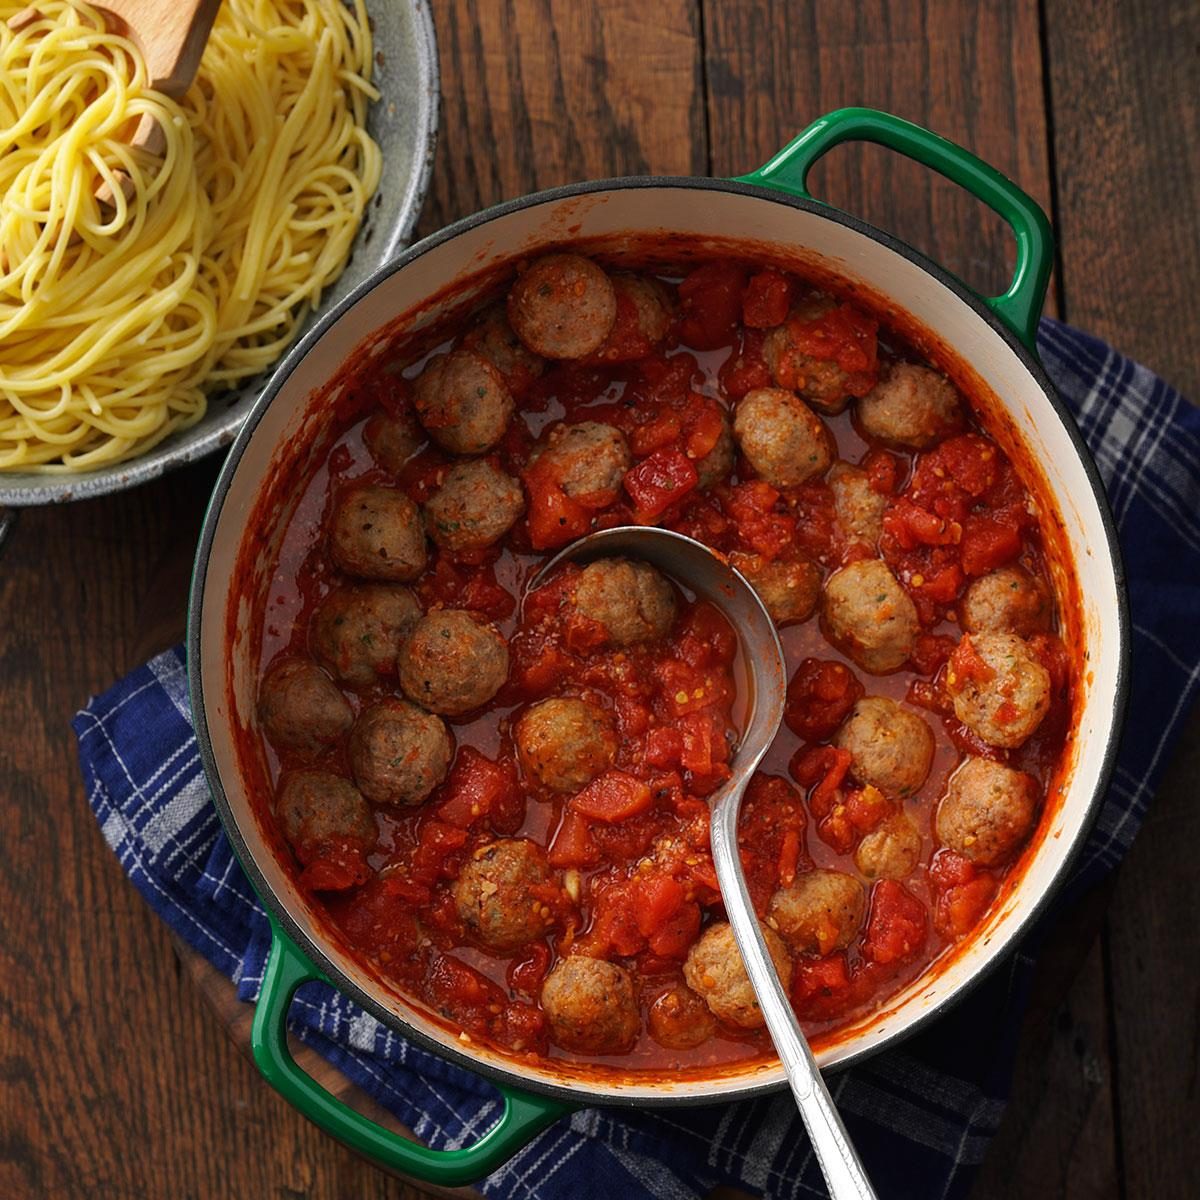 Inspired by: BRAVO Cucina Italiana’s Spaghettini + Meatballs